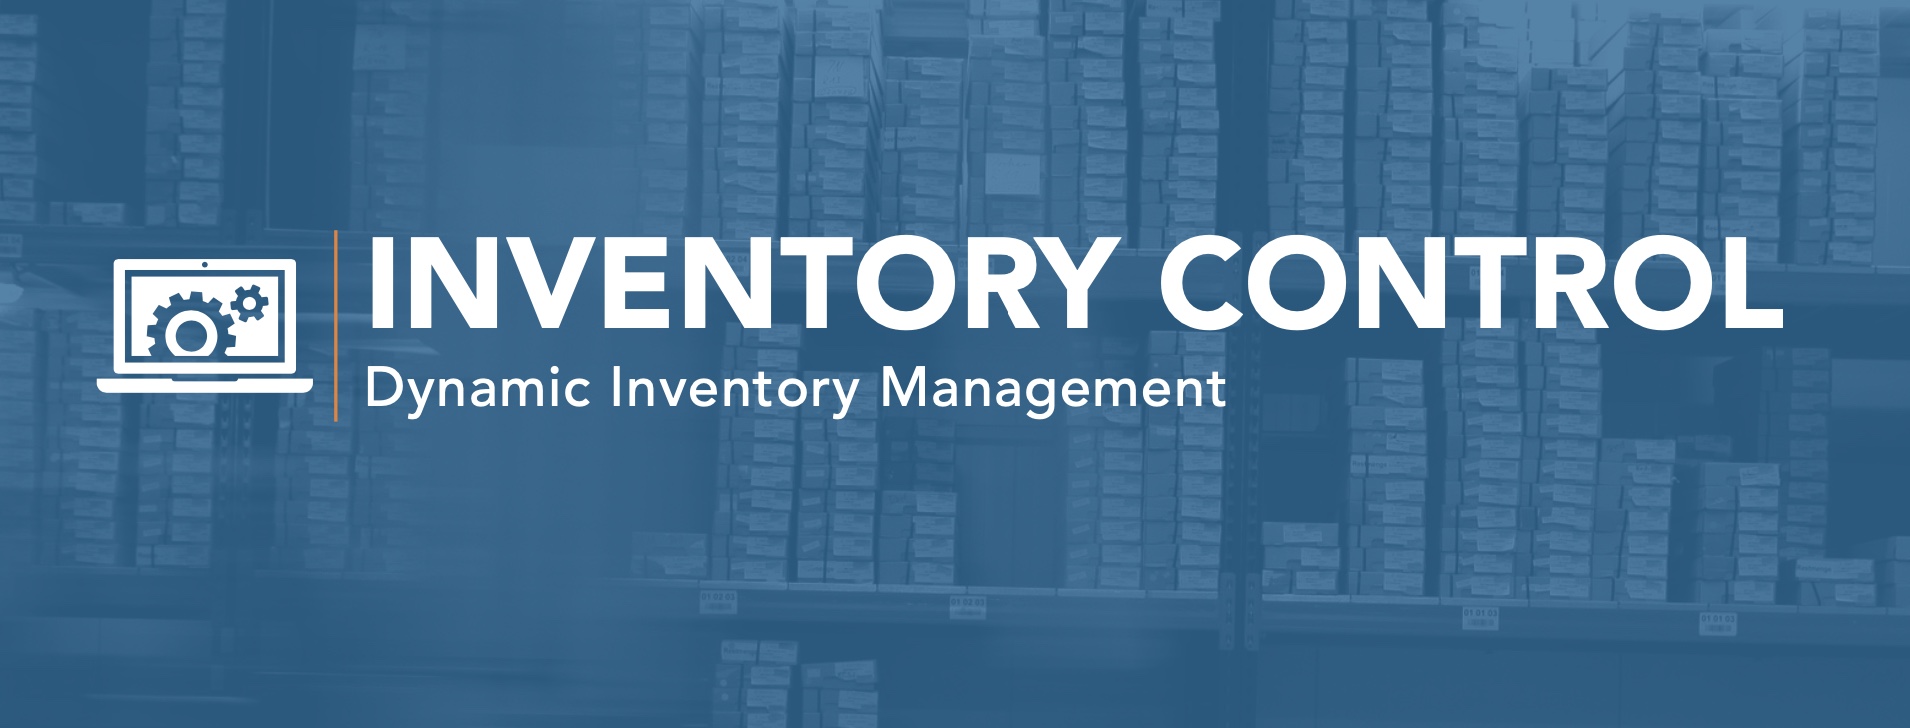 Inventory Control Data Sheet